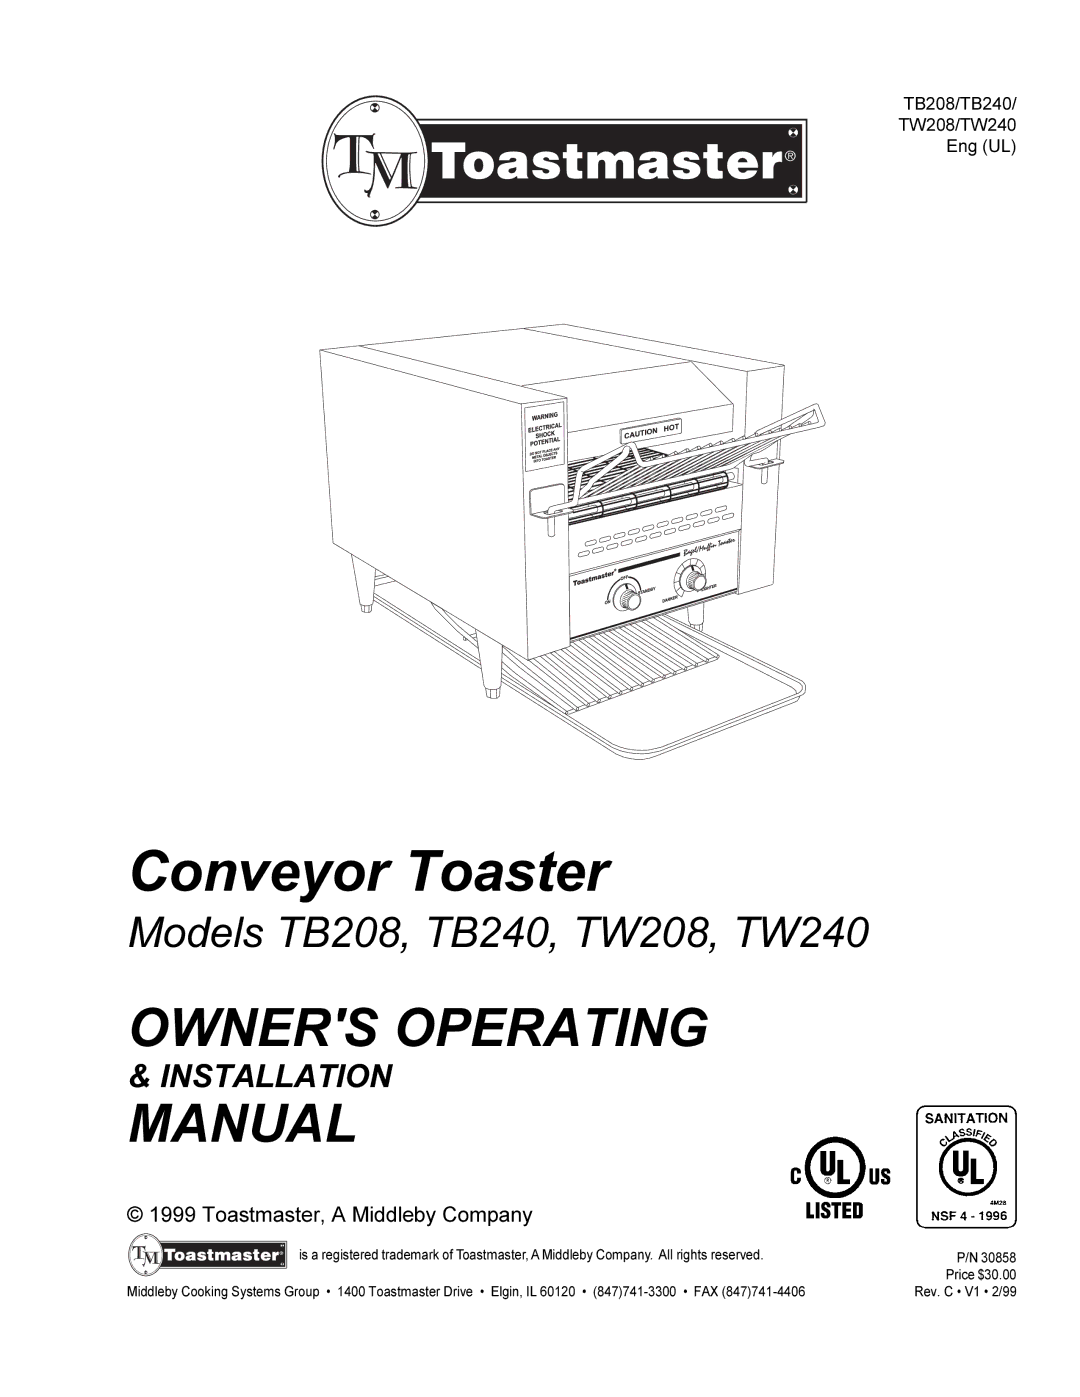 Toastmaster TW208, TW240, TB240, TB208 installation manual Conveyor Toaster 